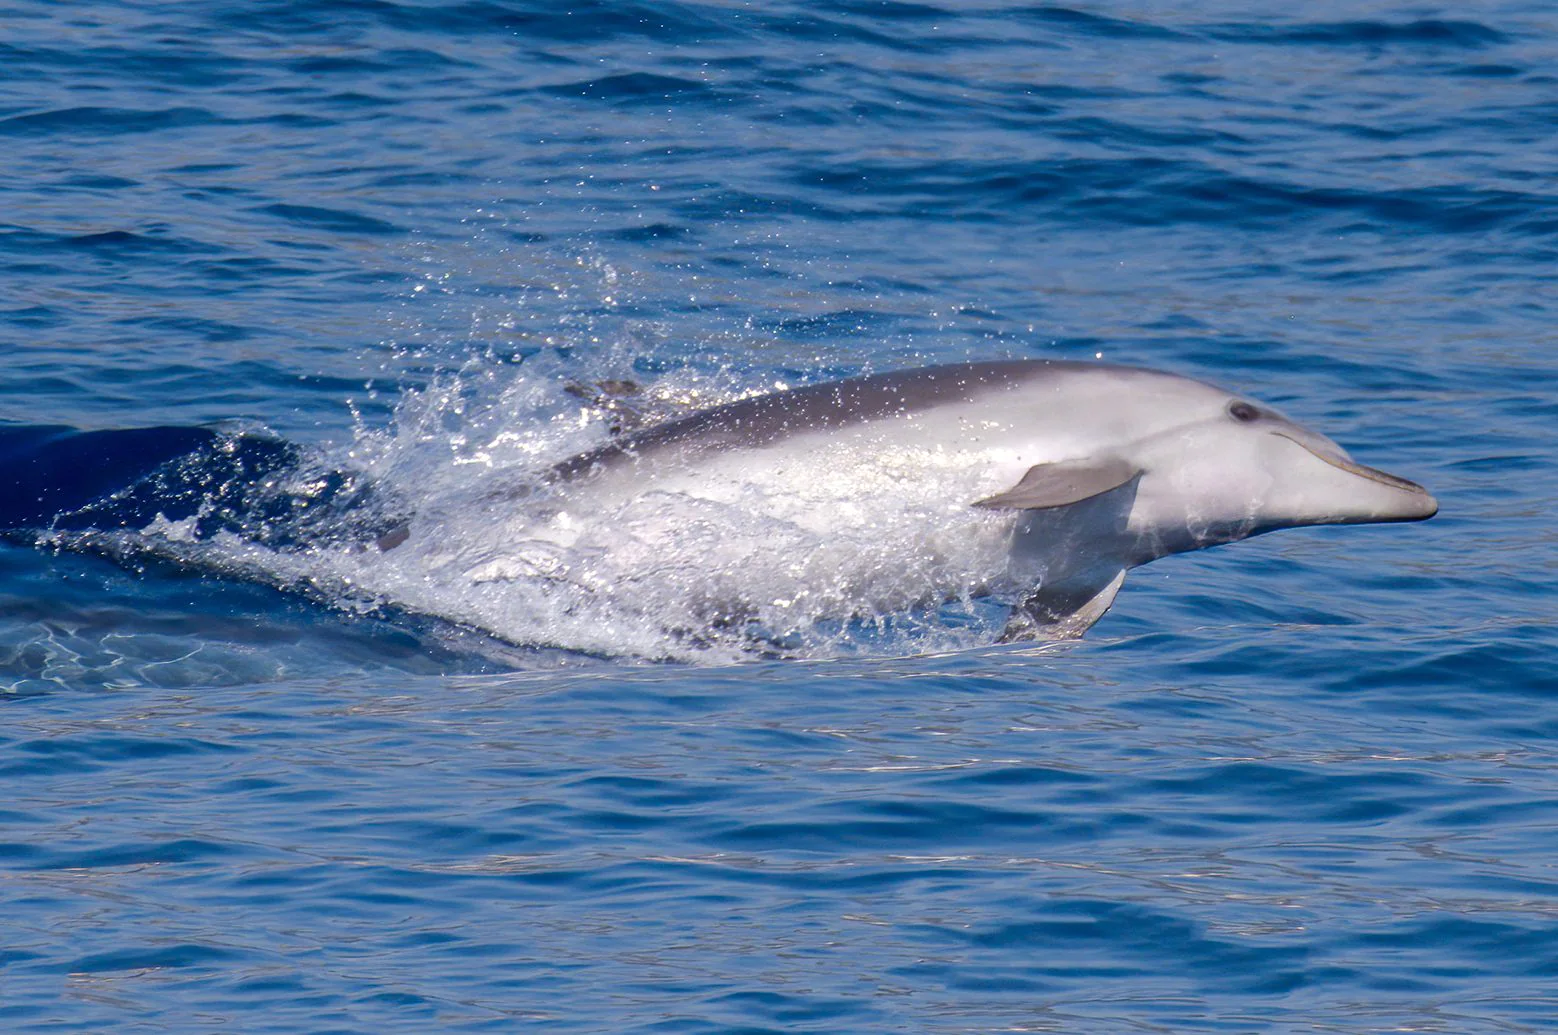 A specimen of bottlenose dolphin in the Ligurian Sea. Credit: Andrea Centini